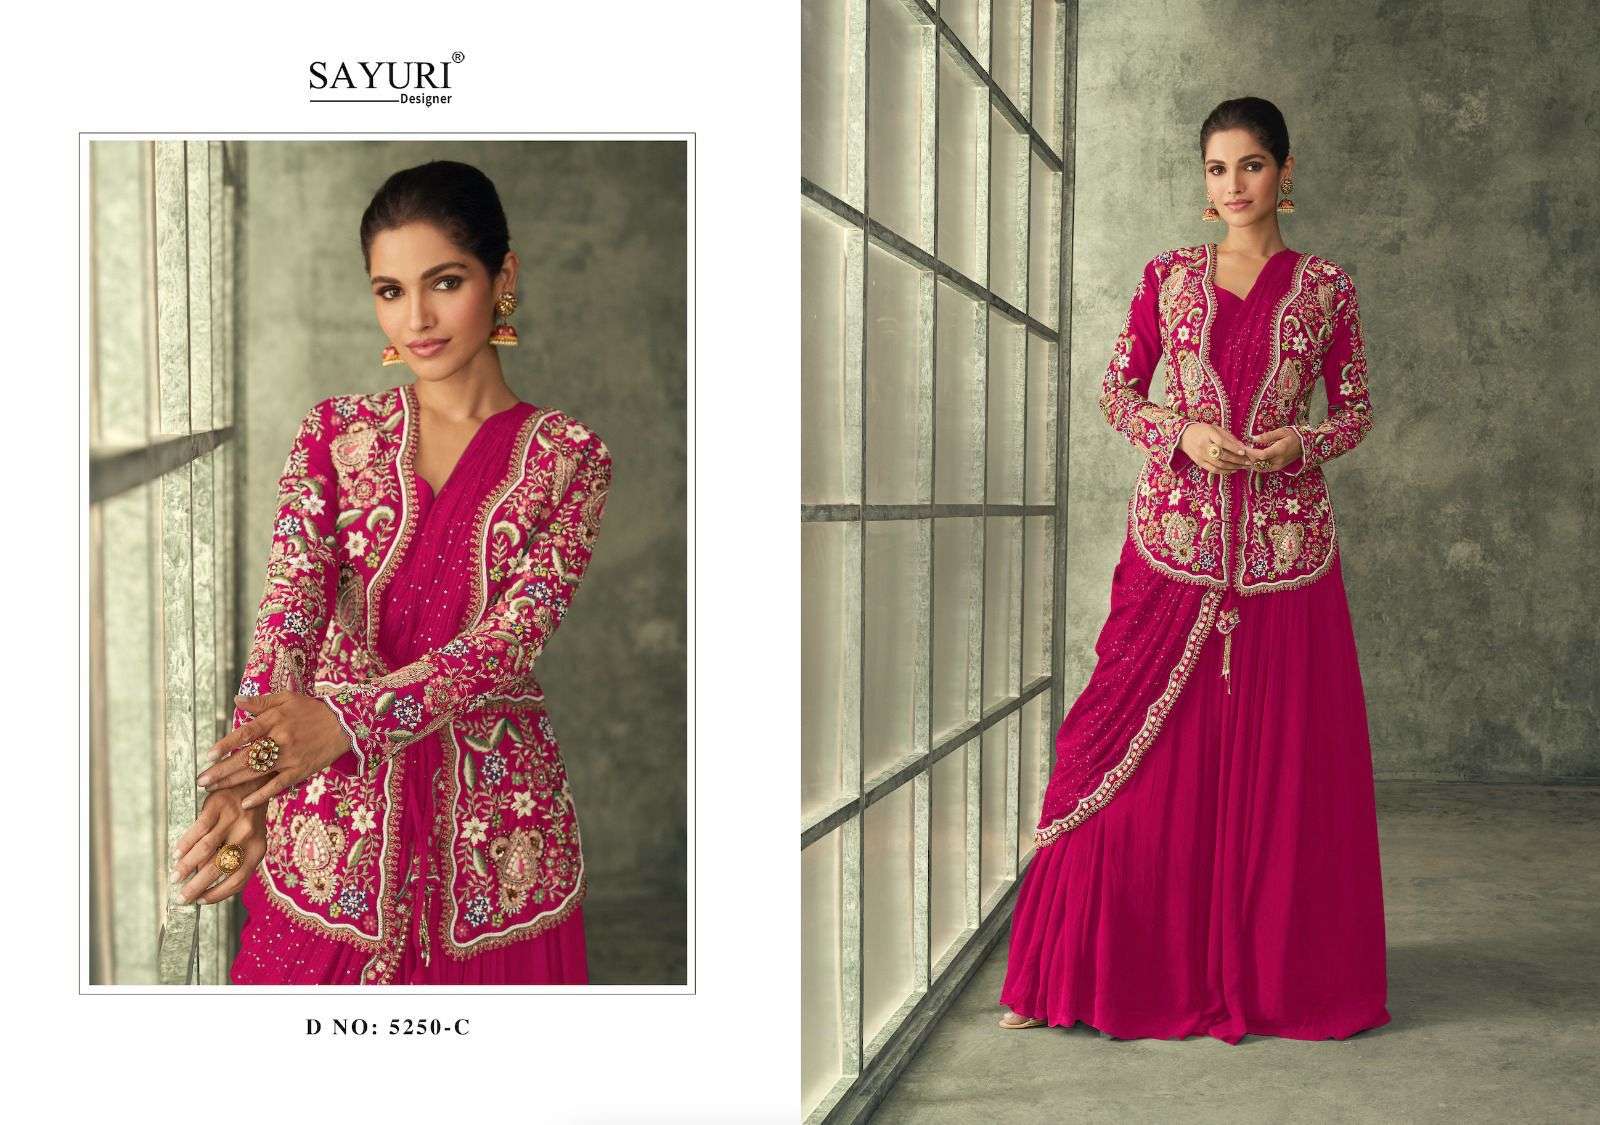 Sayuri Evergreen Special 5250 Colours Designer Gown Wholesale catalog